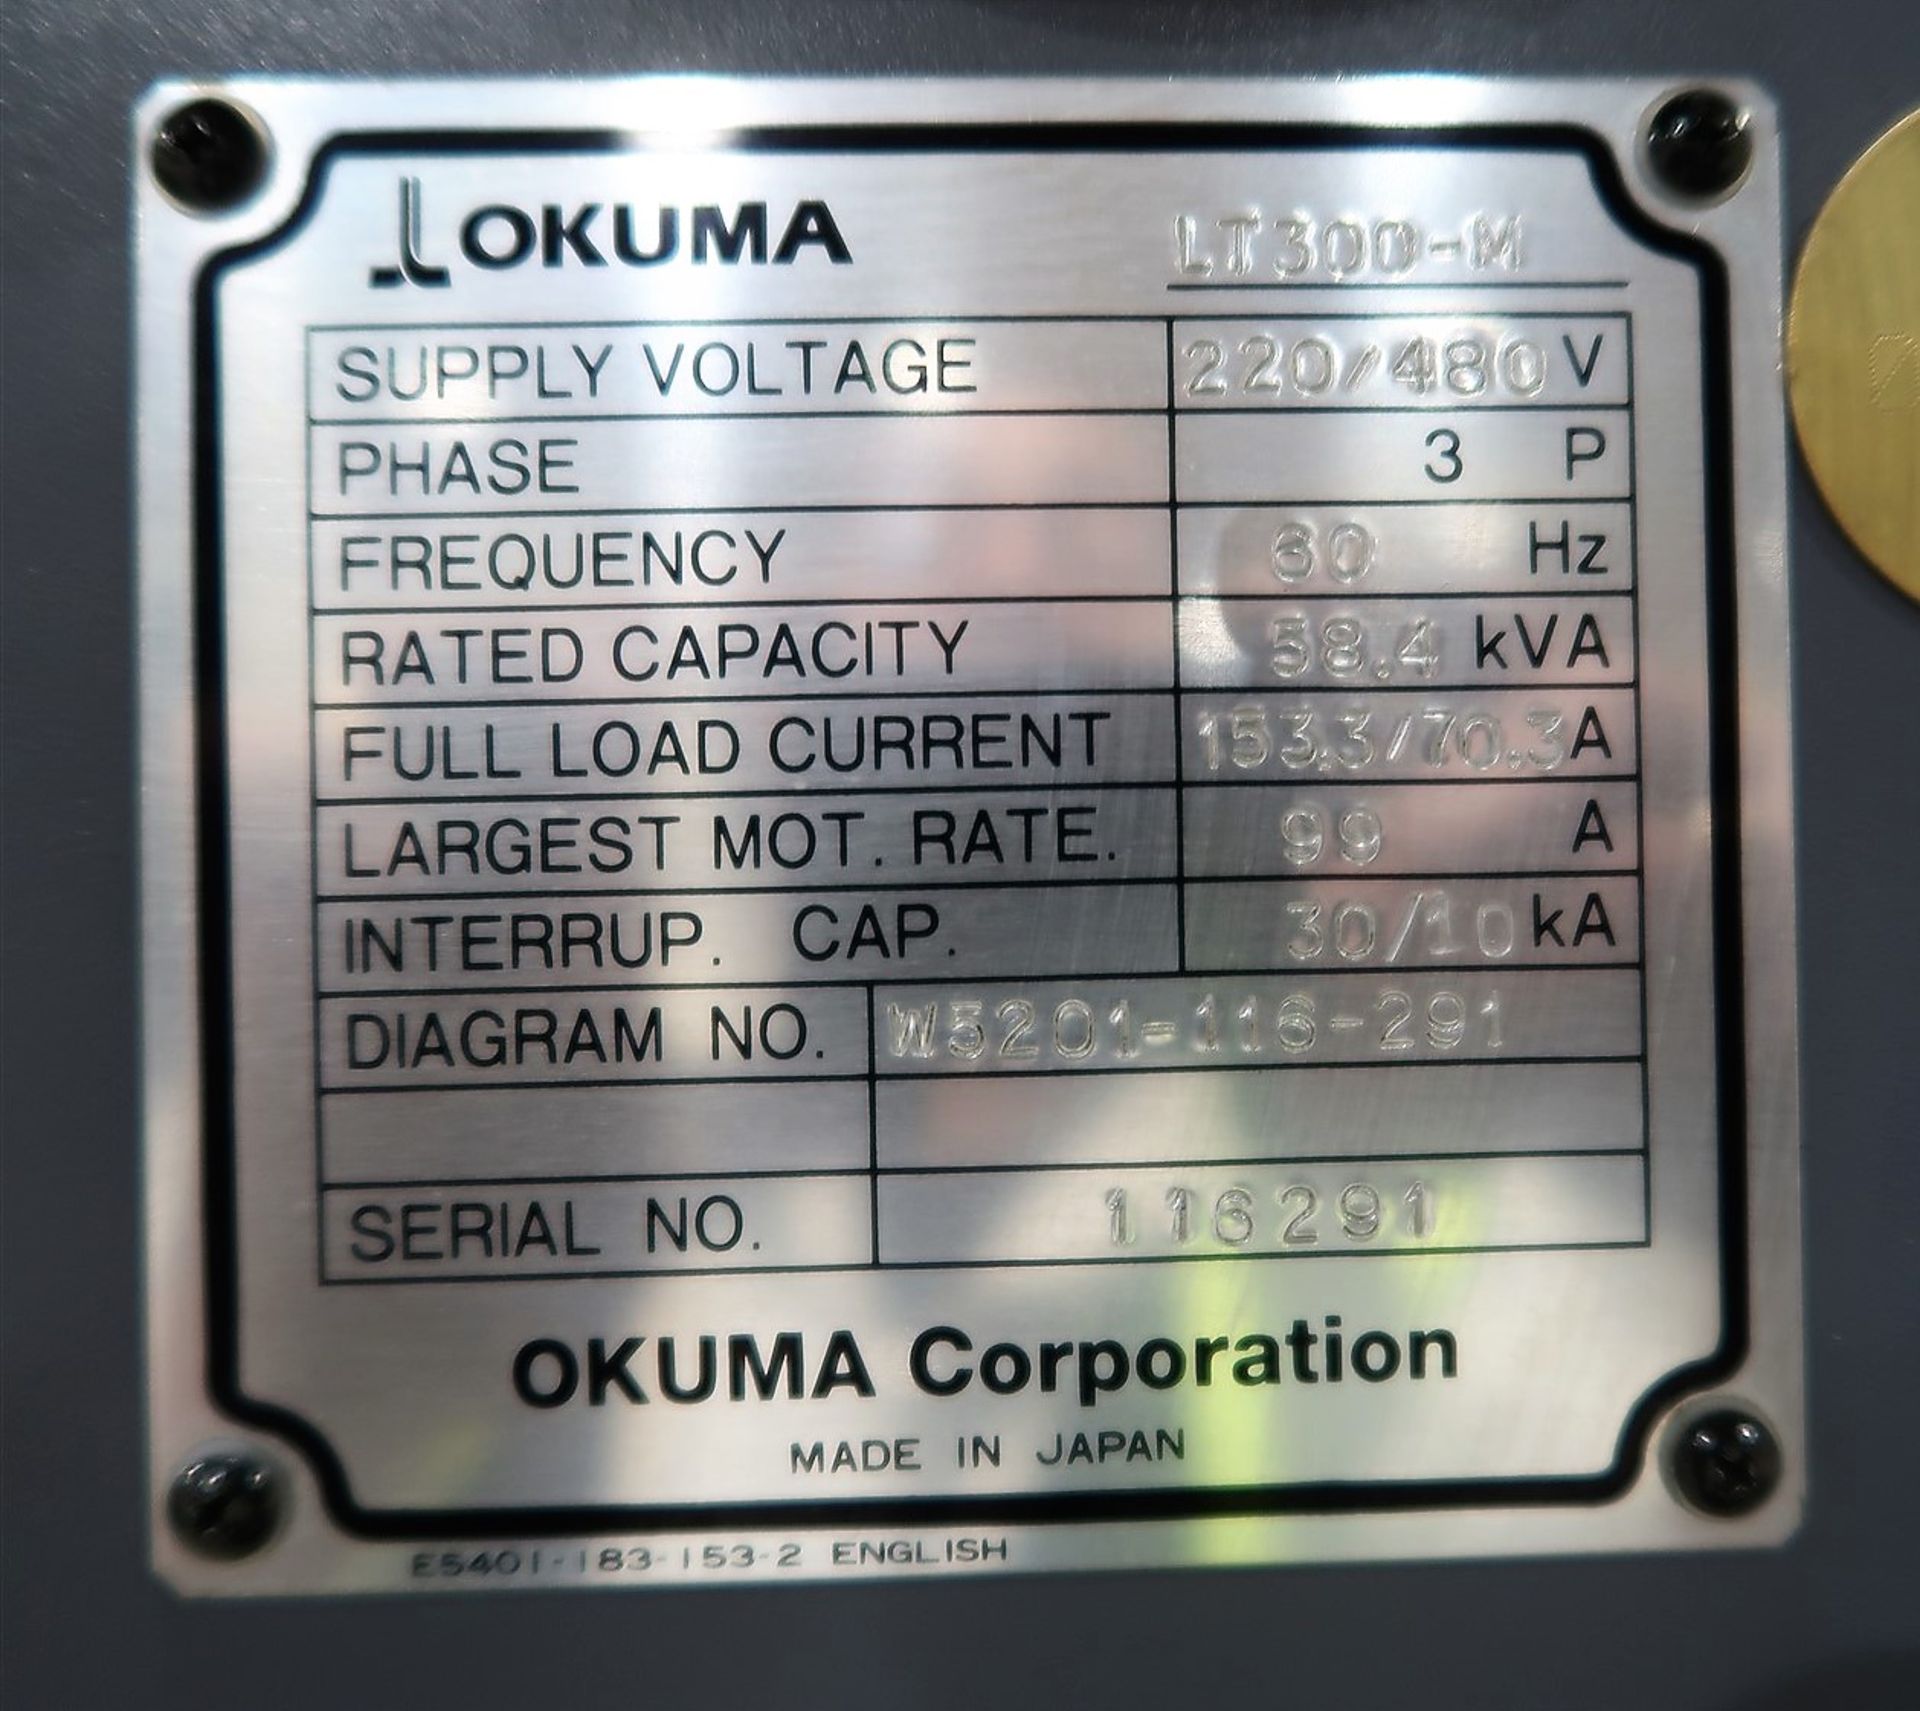 2005 OKUMA LT-300M TWIN STAR CNC HORIZONTAL TURNING CENTER, OKUMA OSP - 100 CNC CONTROLLER, 2X 12- - Image 9 of 21